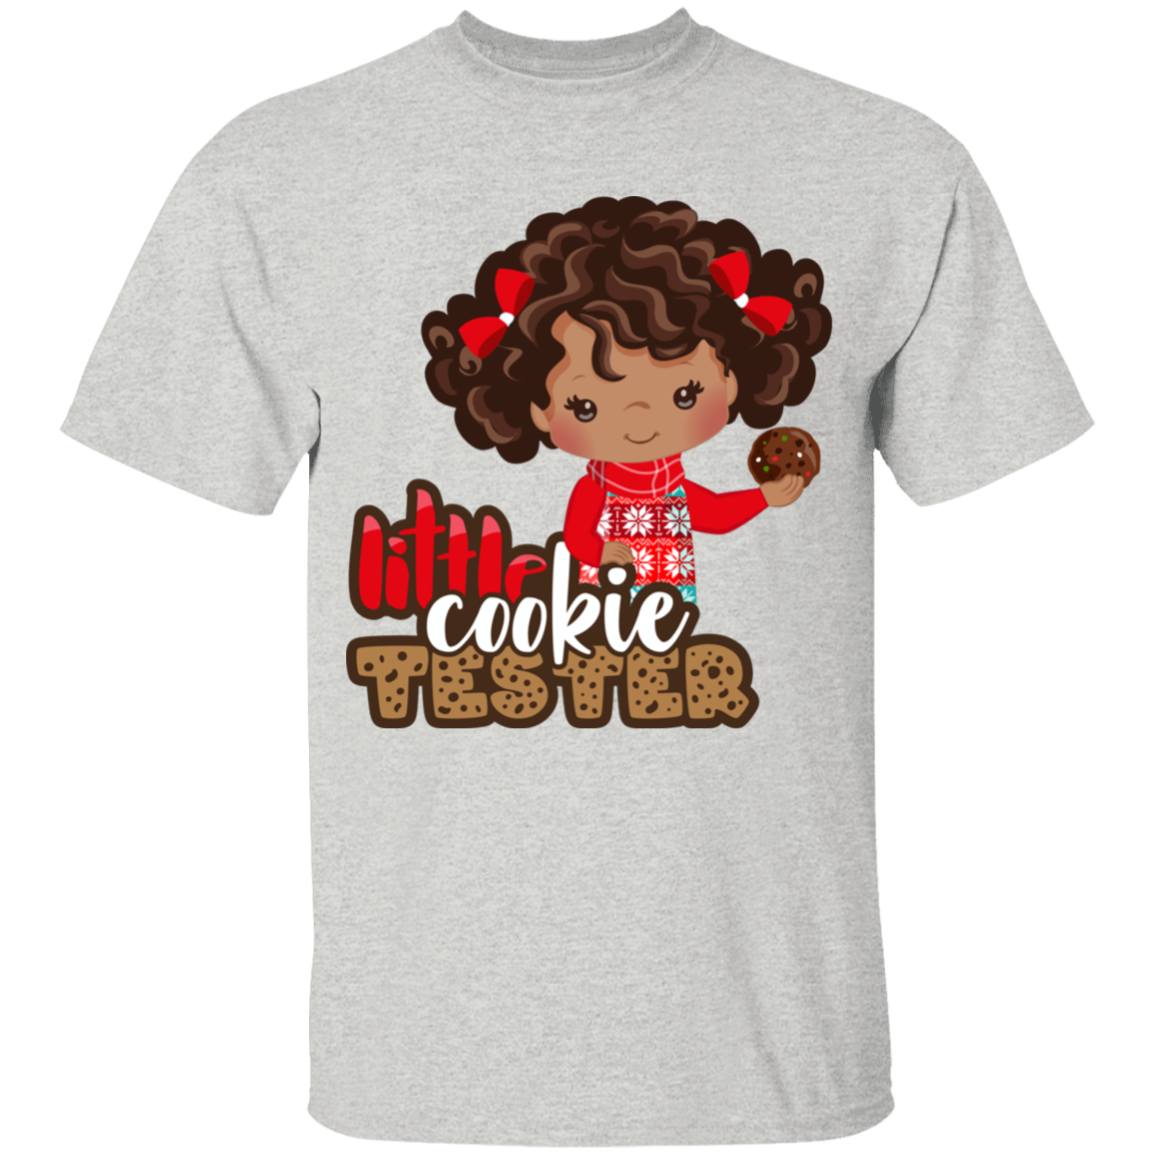 Little Cookie Tester Girl Cotton T-Shirt